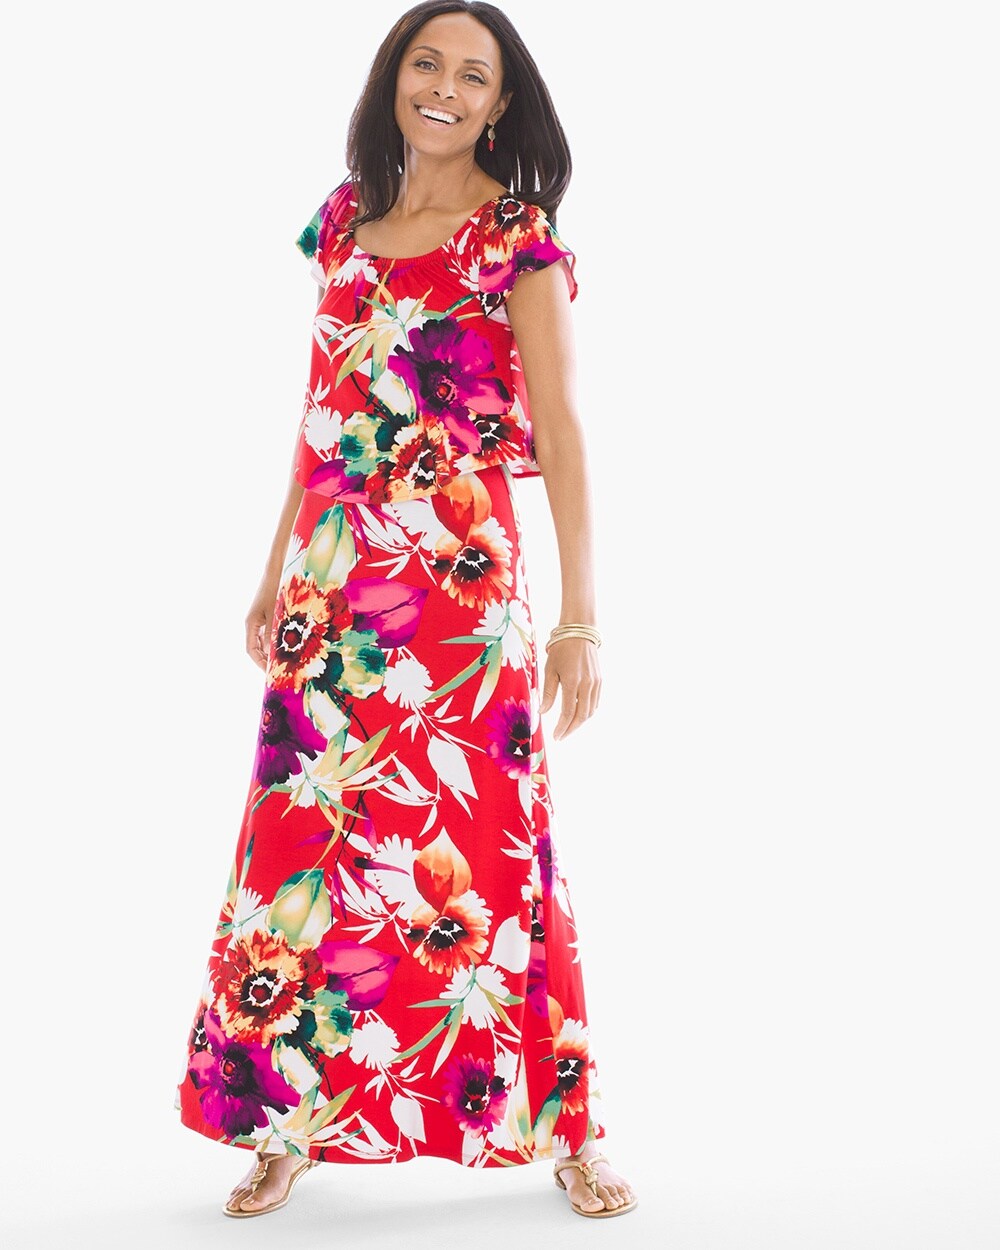 bold floral dress